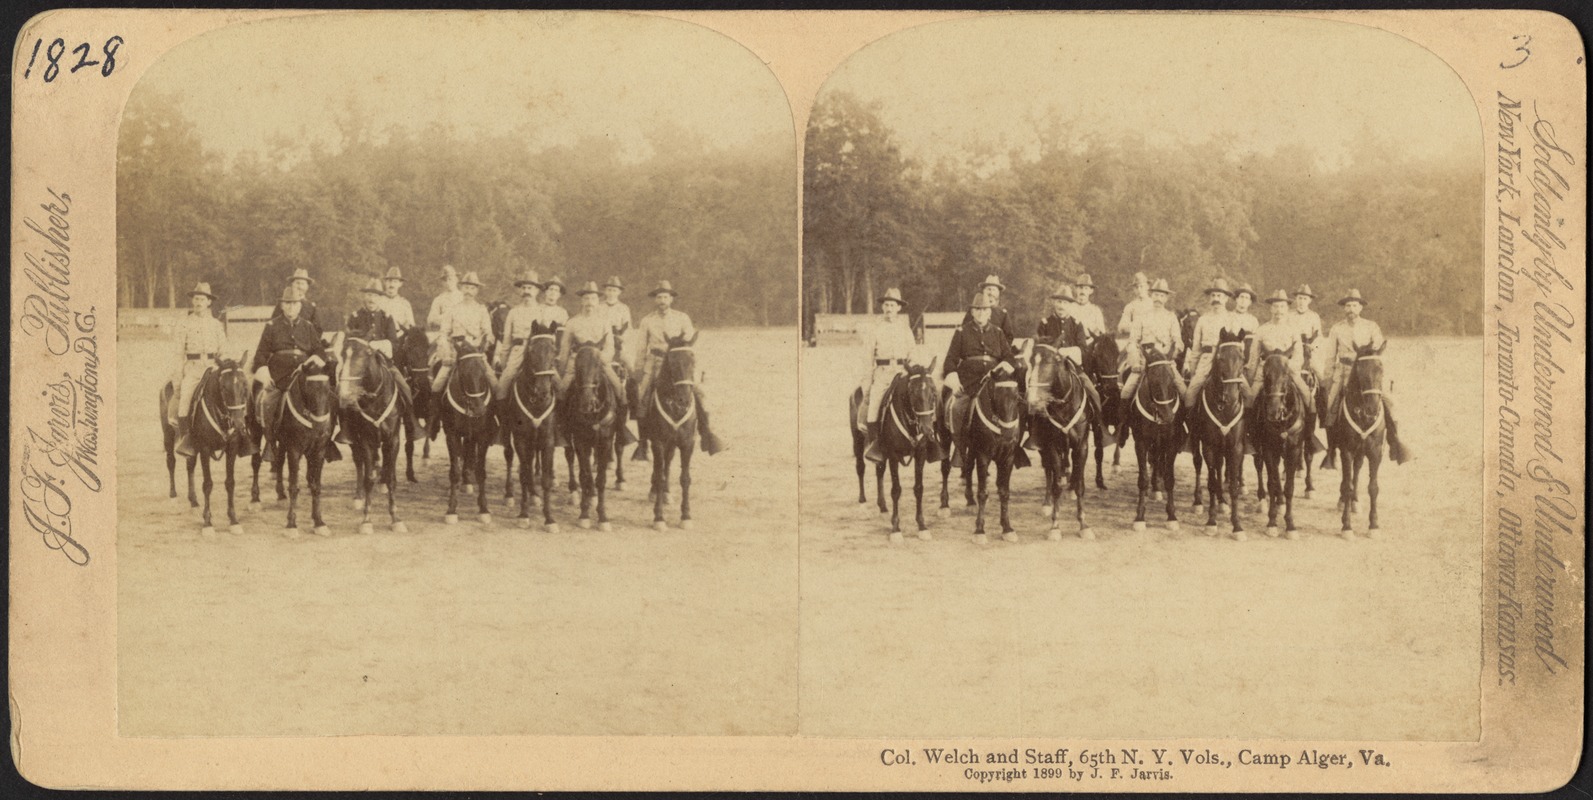 Col. Welch and staff, 65th N.Y. Vols., Camp Alger, Va.